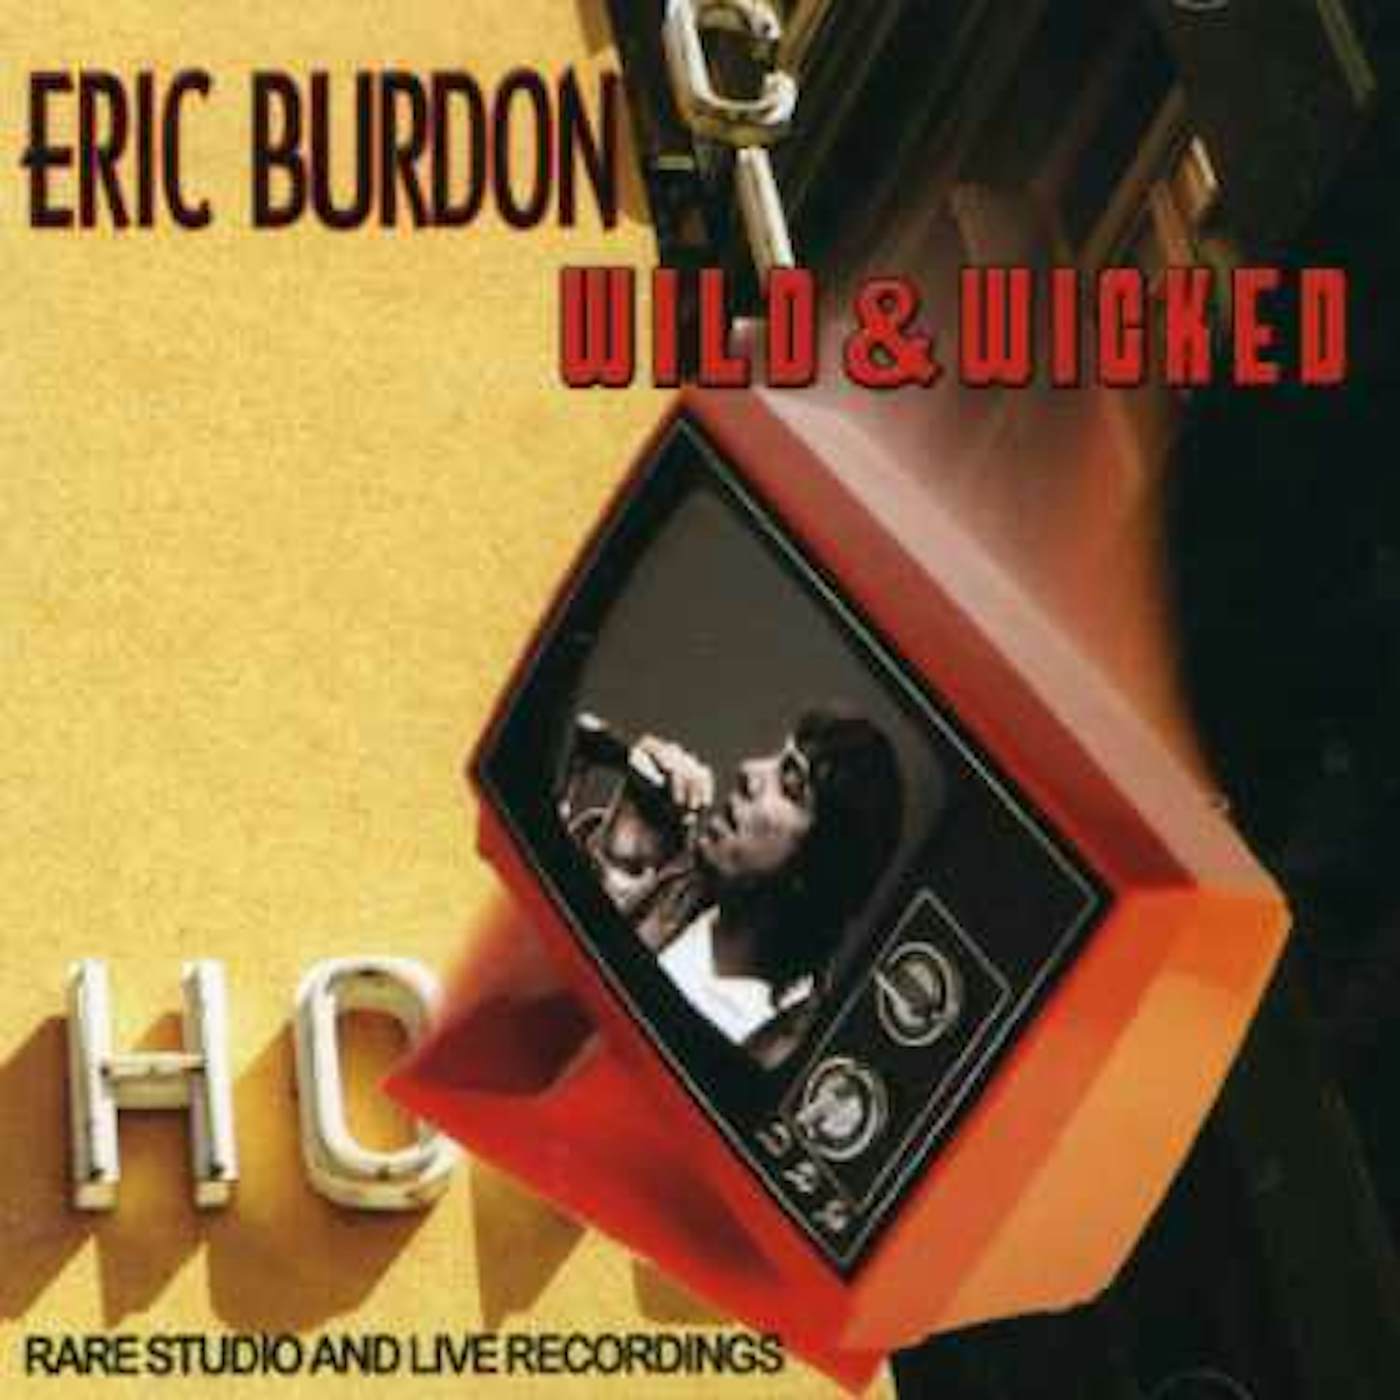 Eric Burdon WILD & WICKED CD